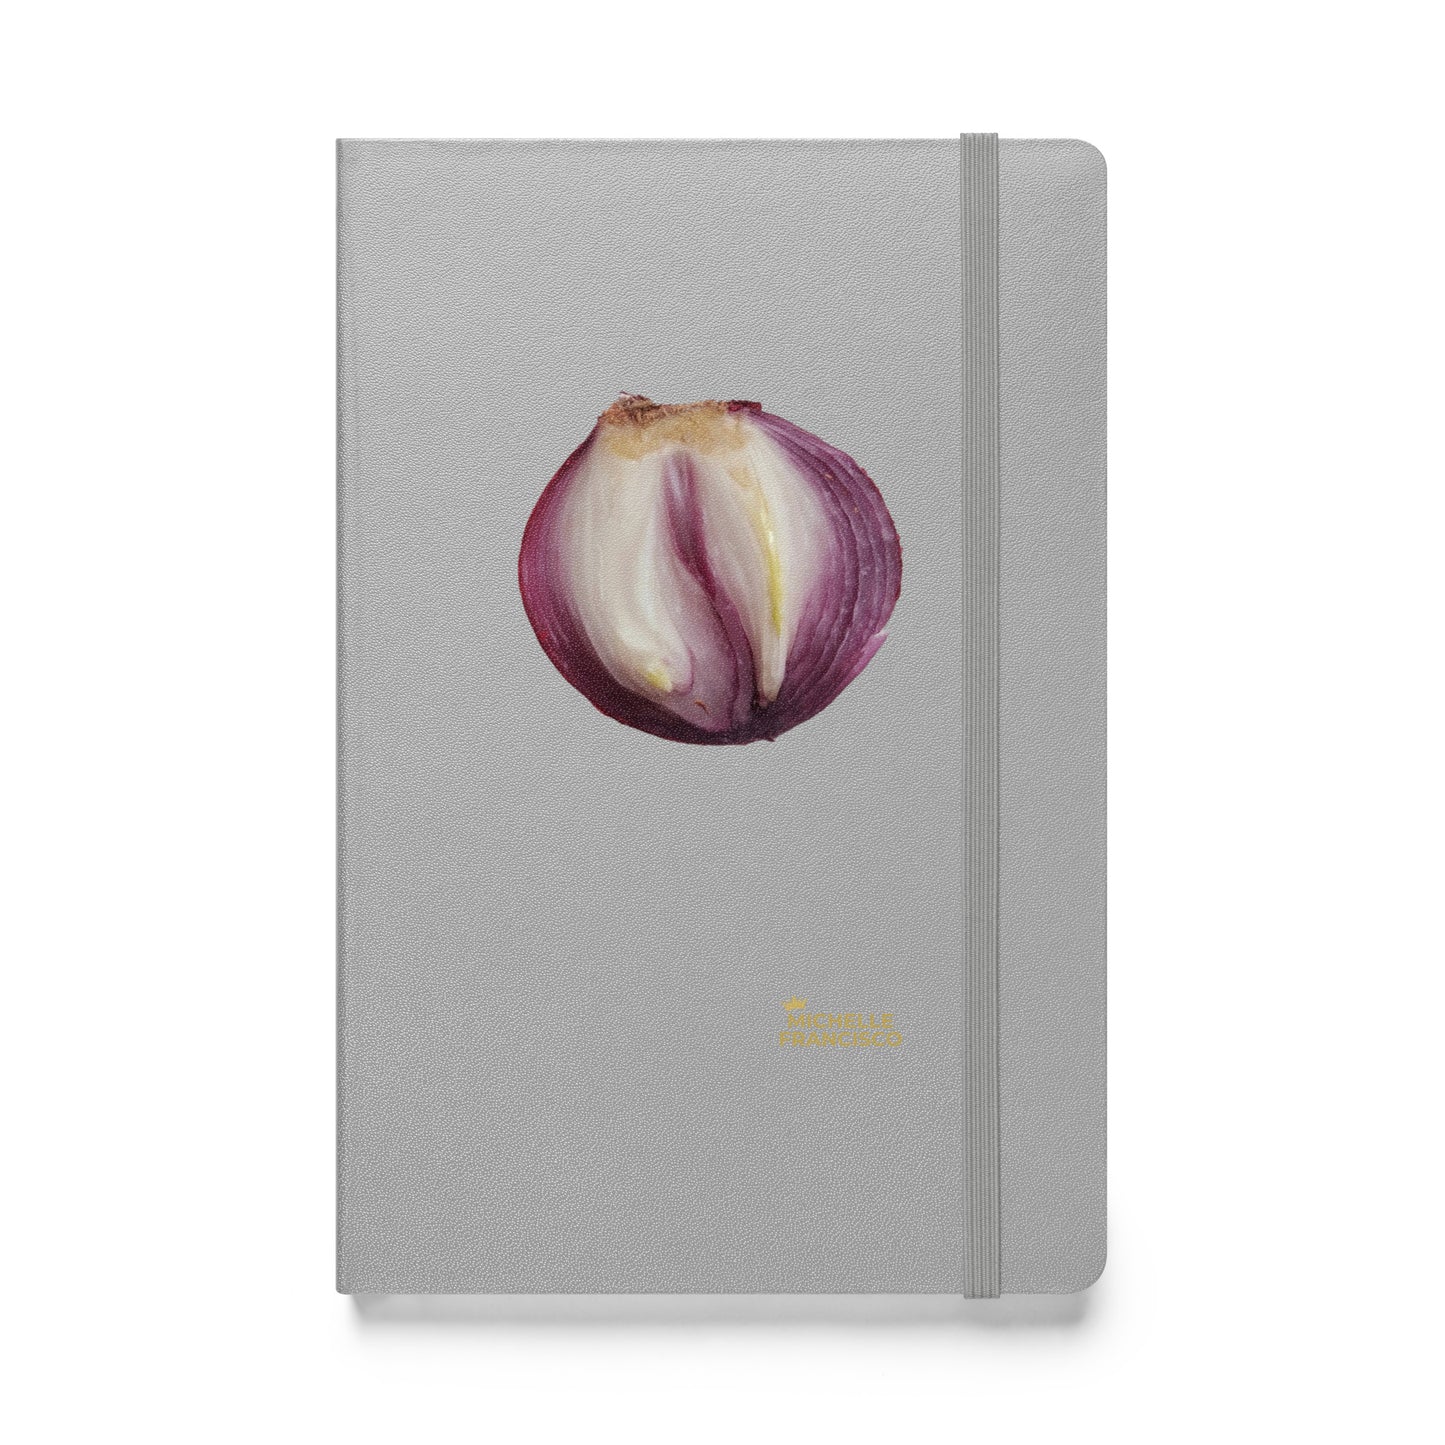 Onion Hardcover Bound Notebook